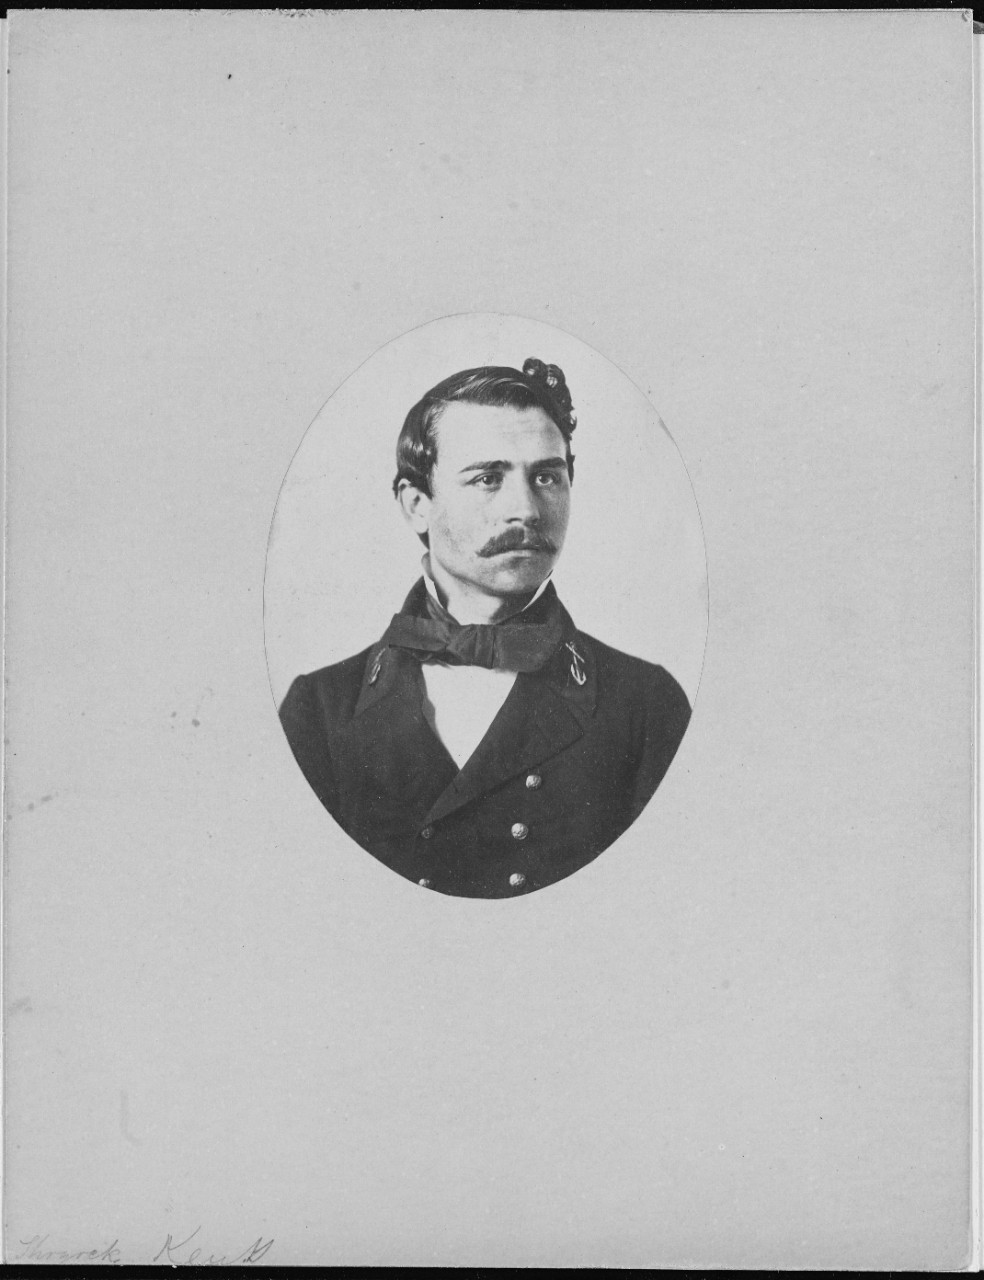 Midshipman George S. Shryock, USN